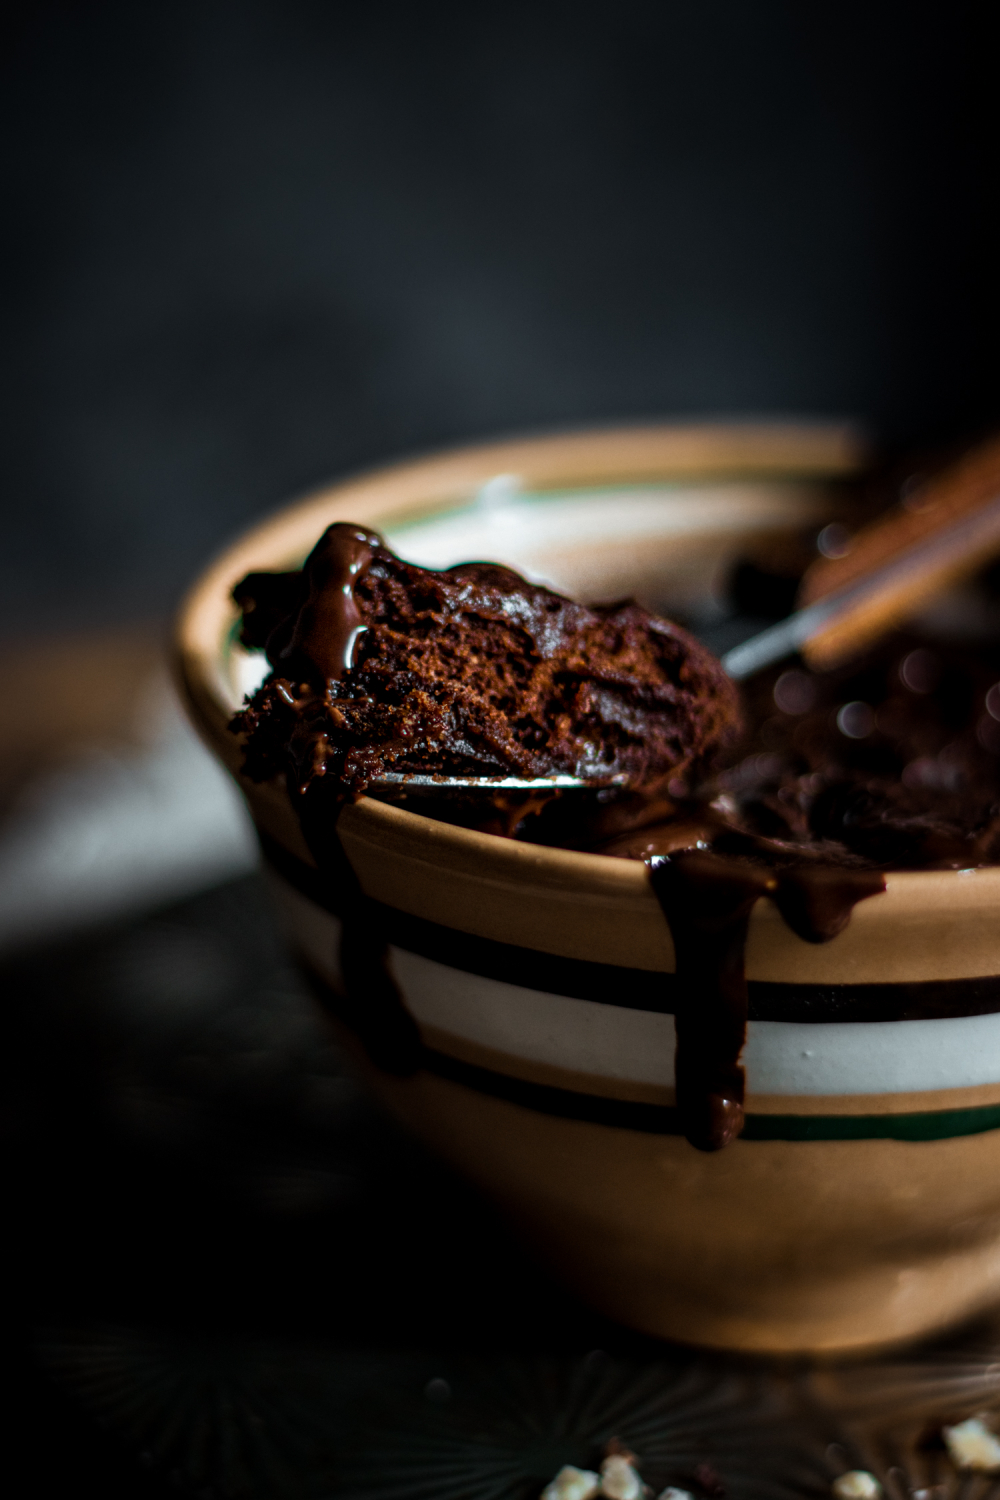 Closeup of spoonful of chocolate mug cake, with decadent texture.